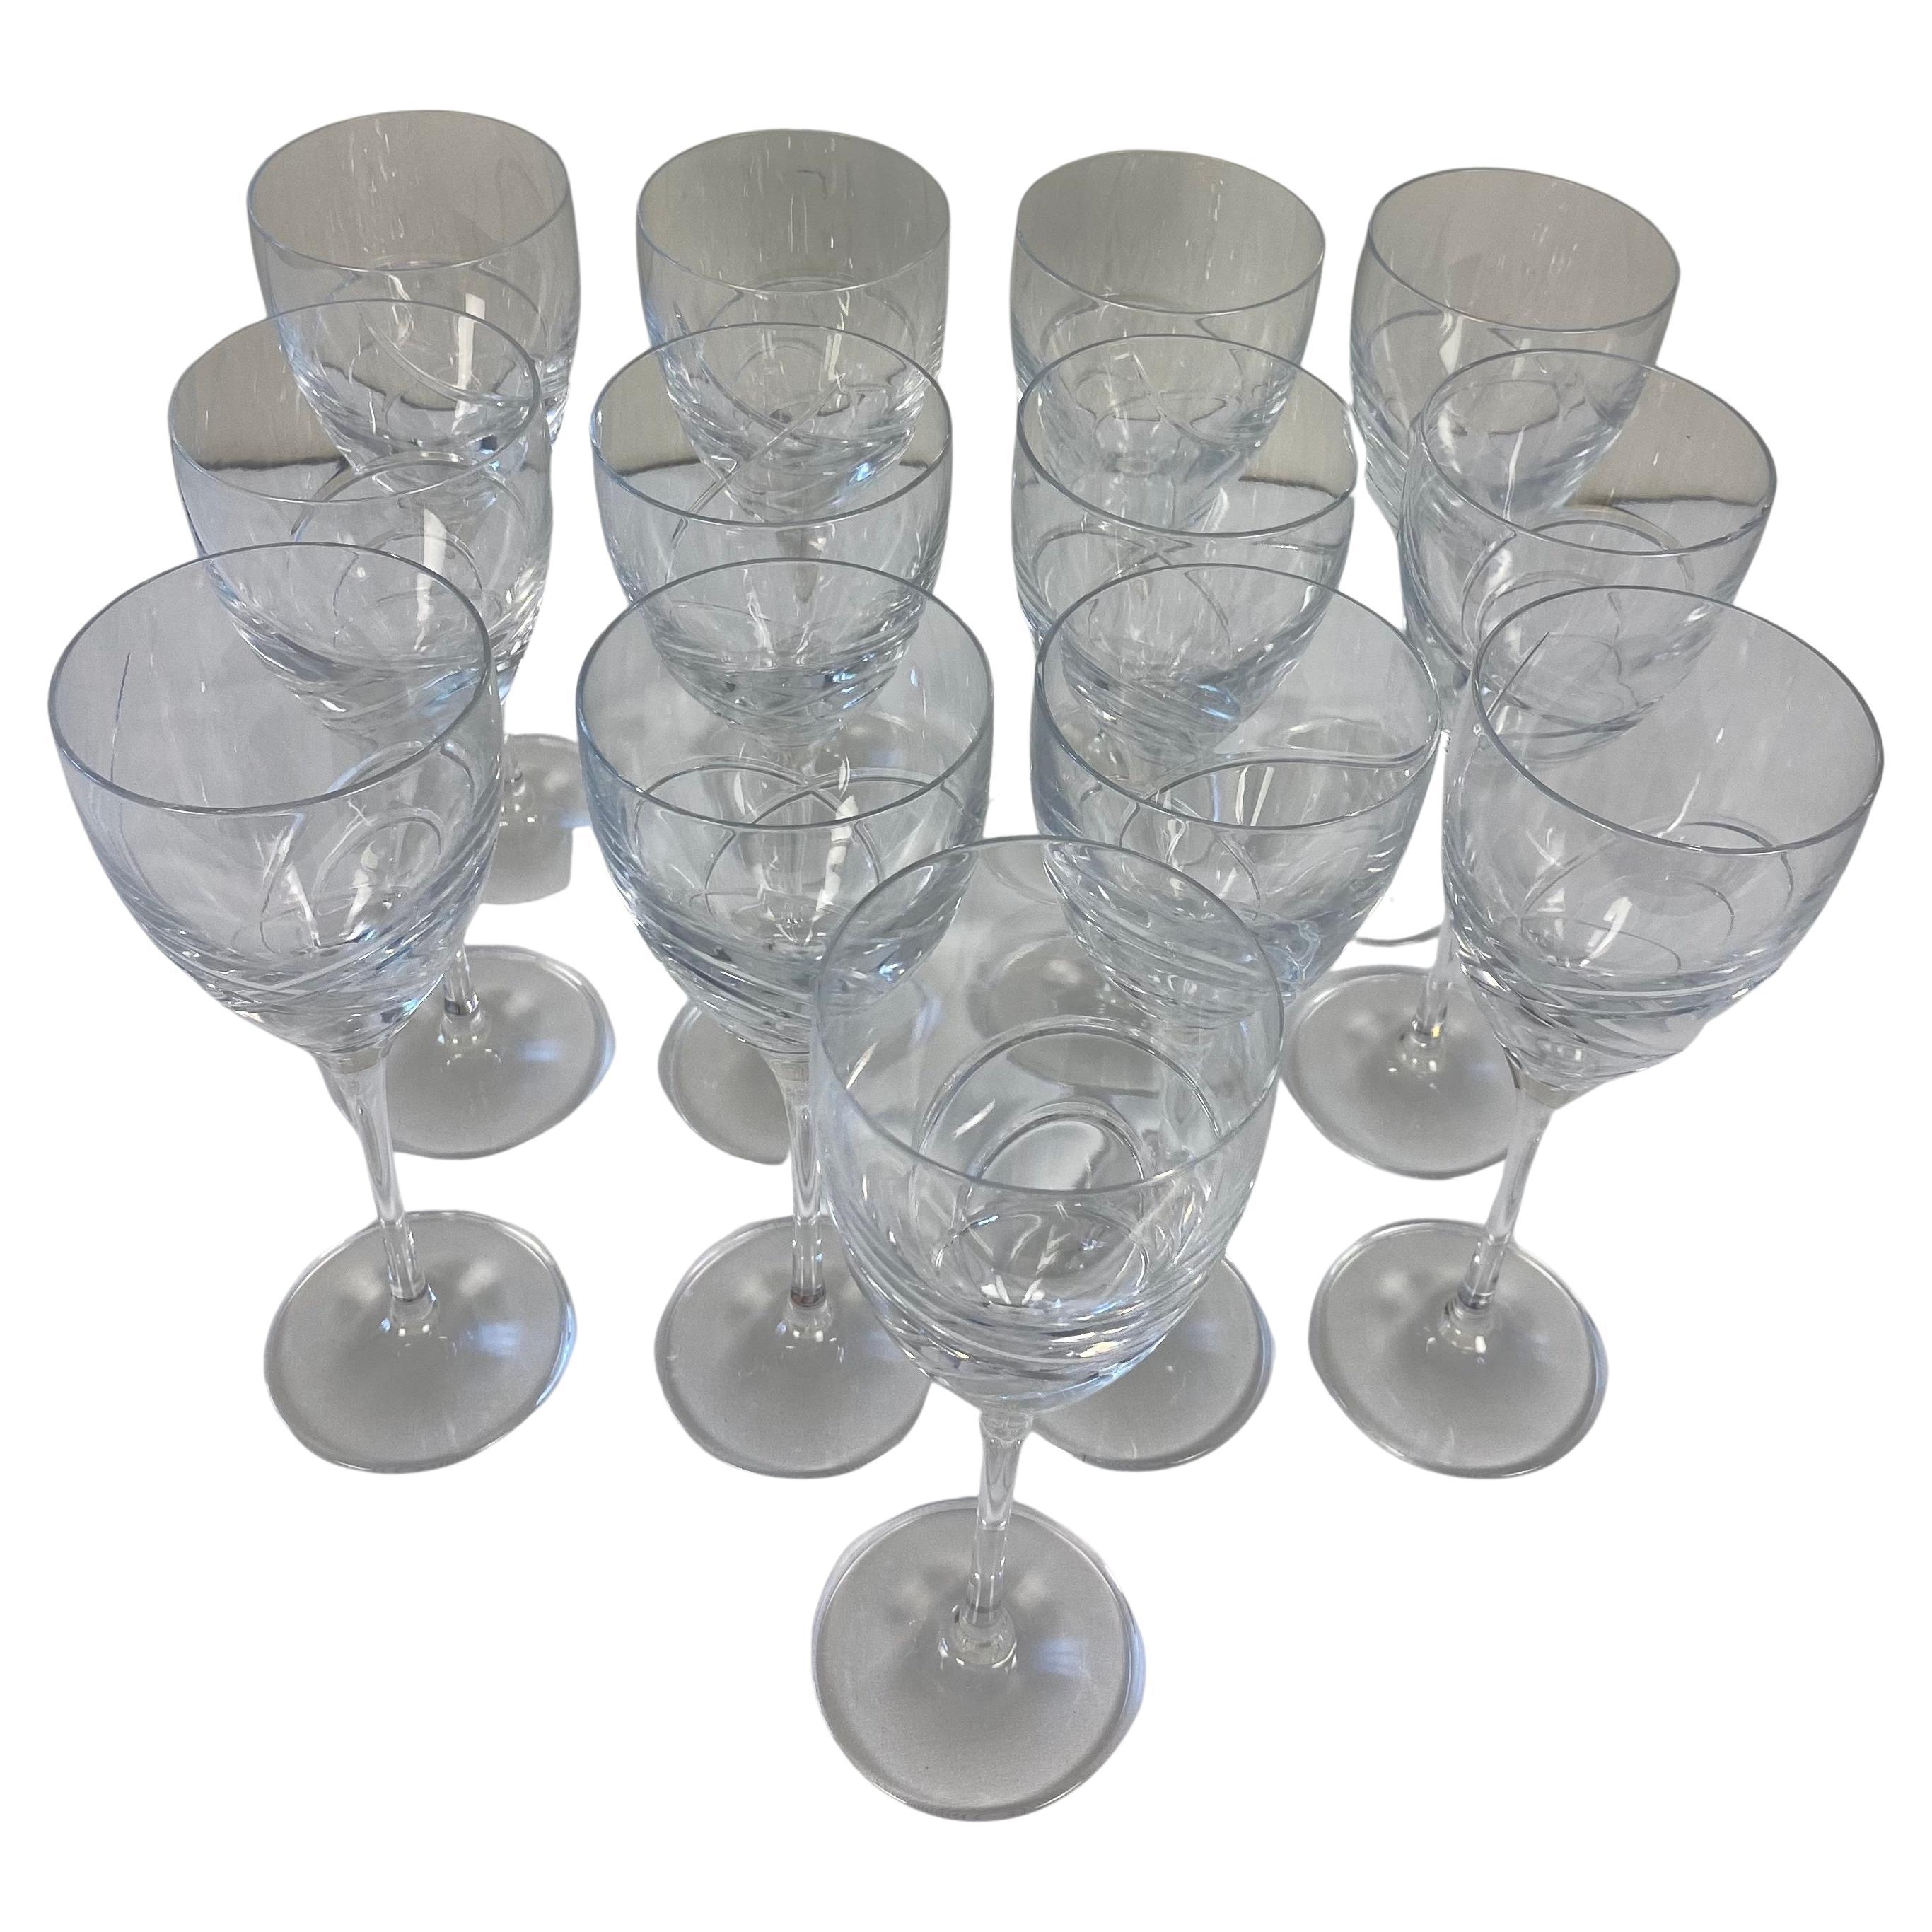 Set of 12 Cut Crystal Wine Glasses by Lenox